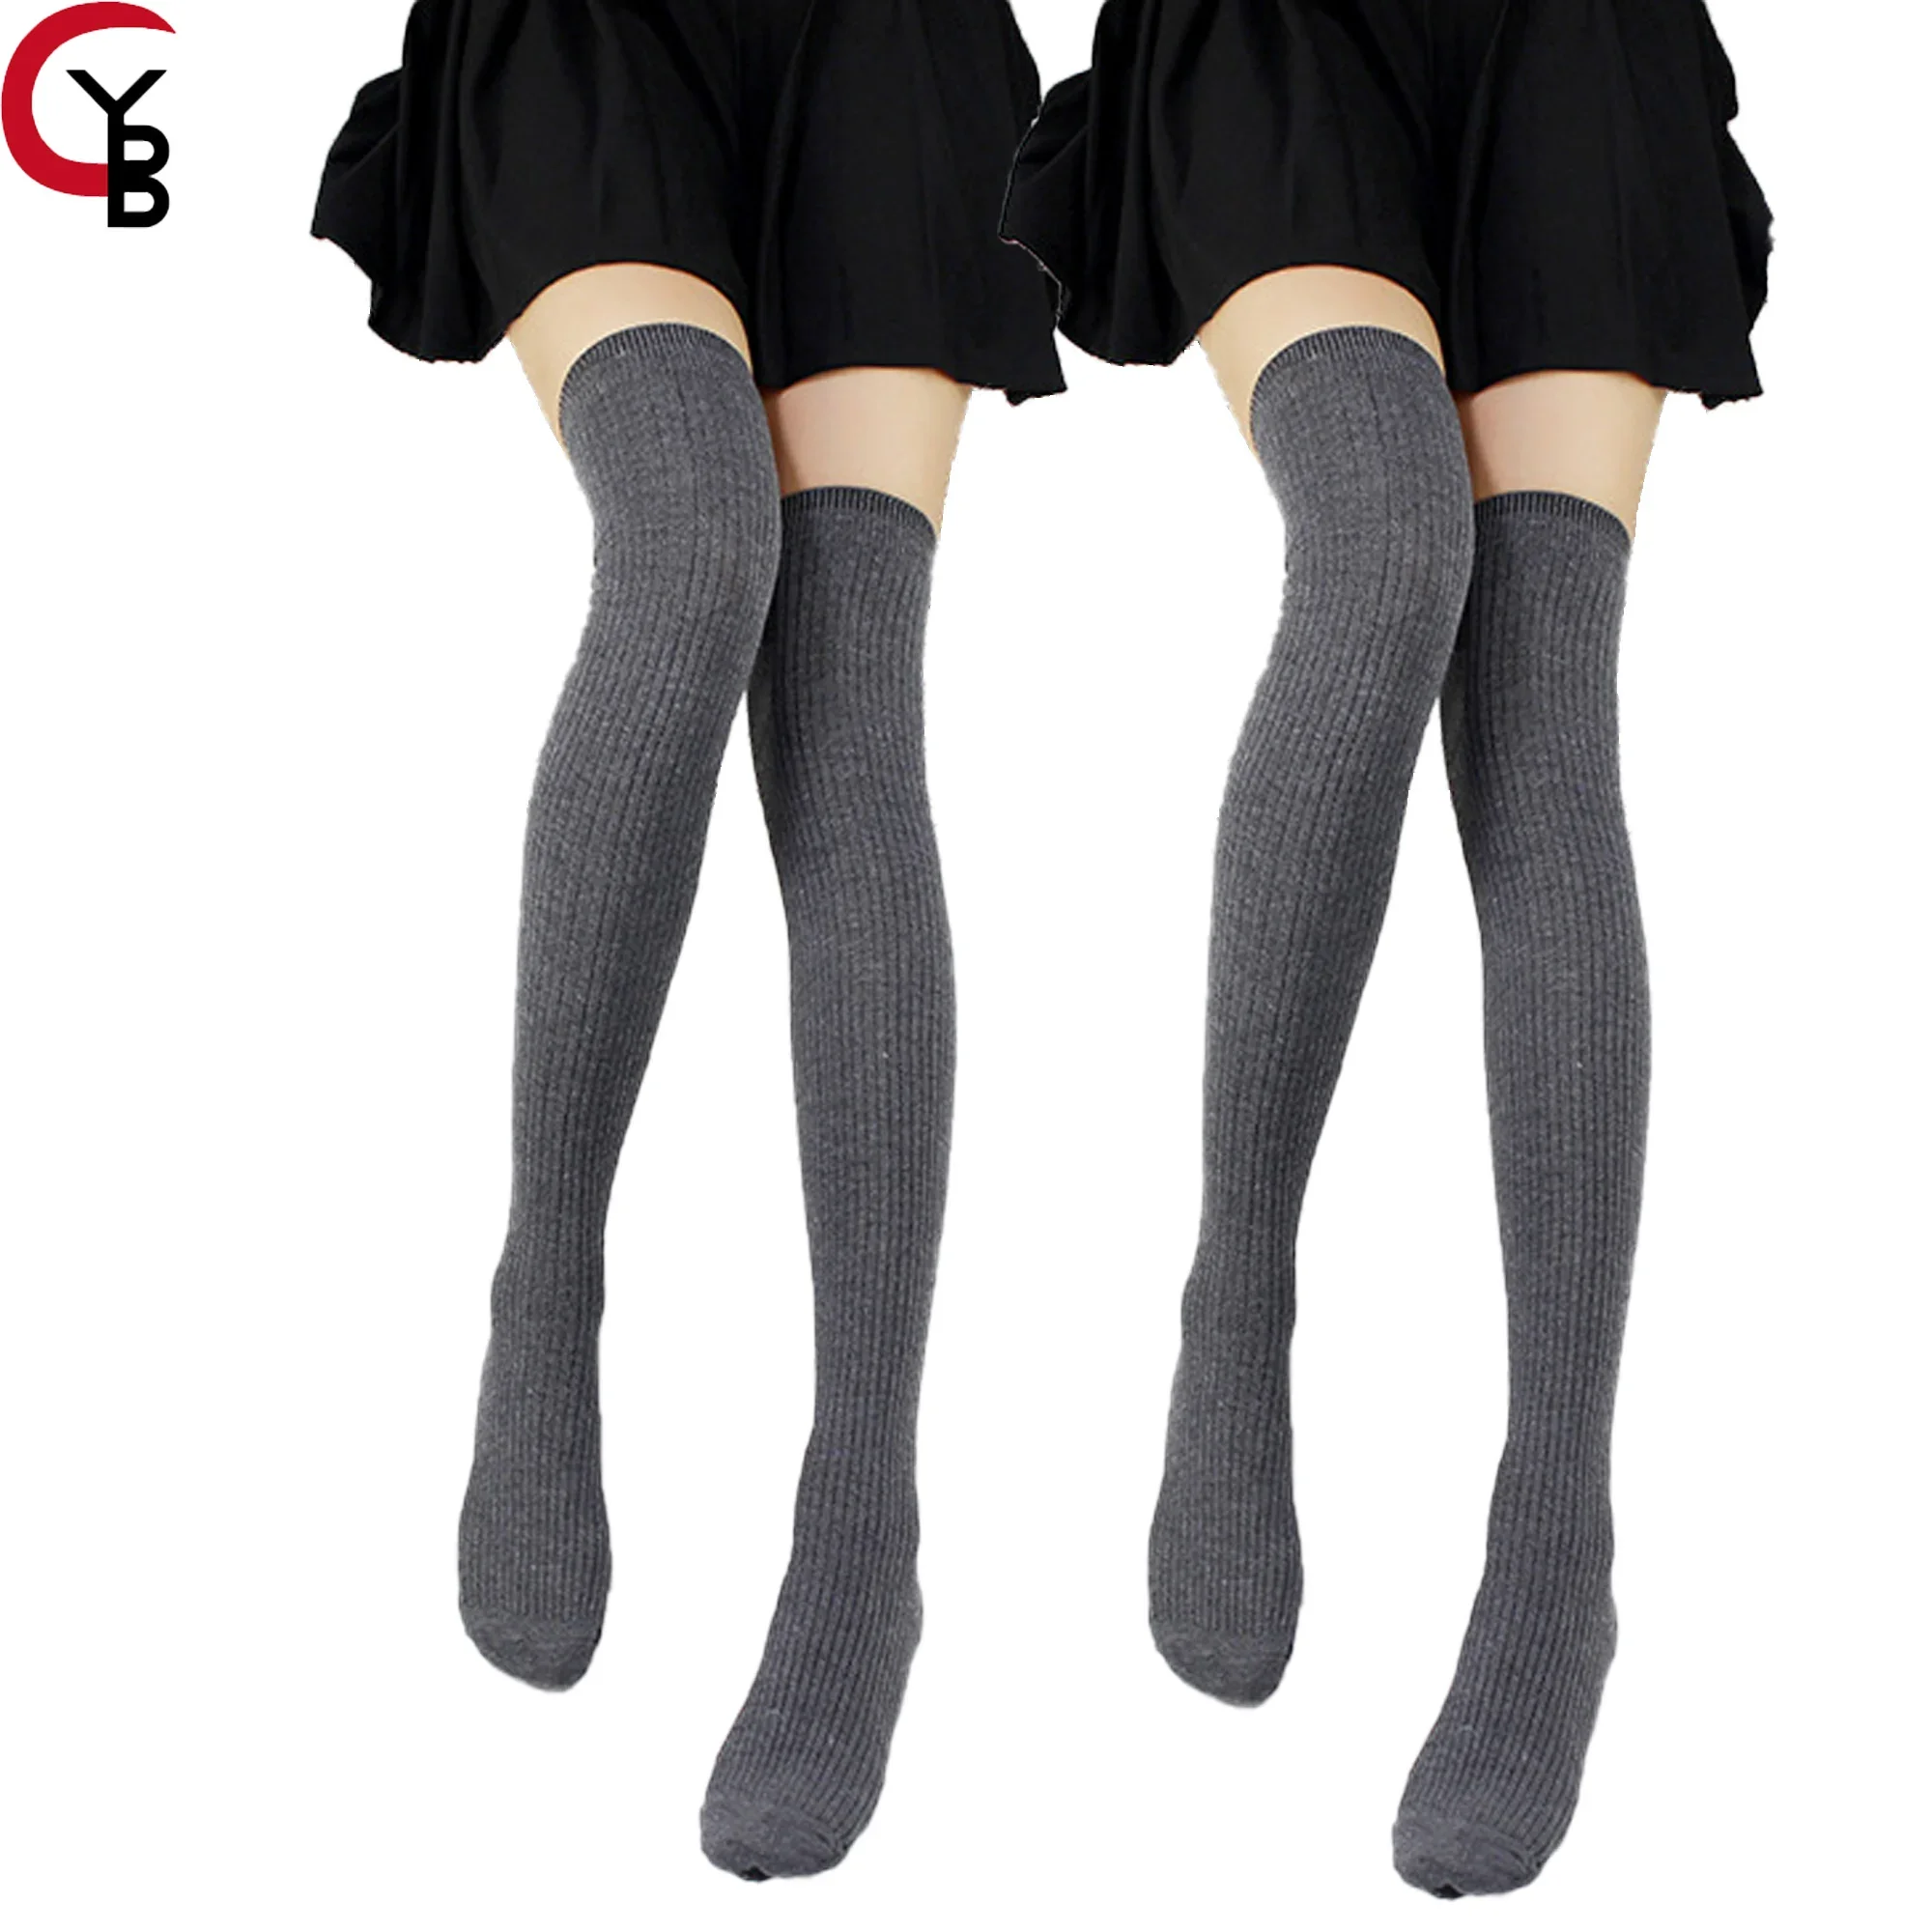 

2 Pairs Women Thigh High Socks Extra Long Cotton Knit Warm Thick Tall Long Boot Stockings Leg Warmers